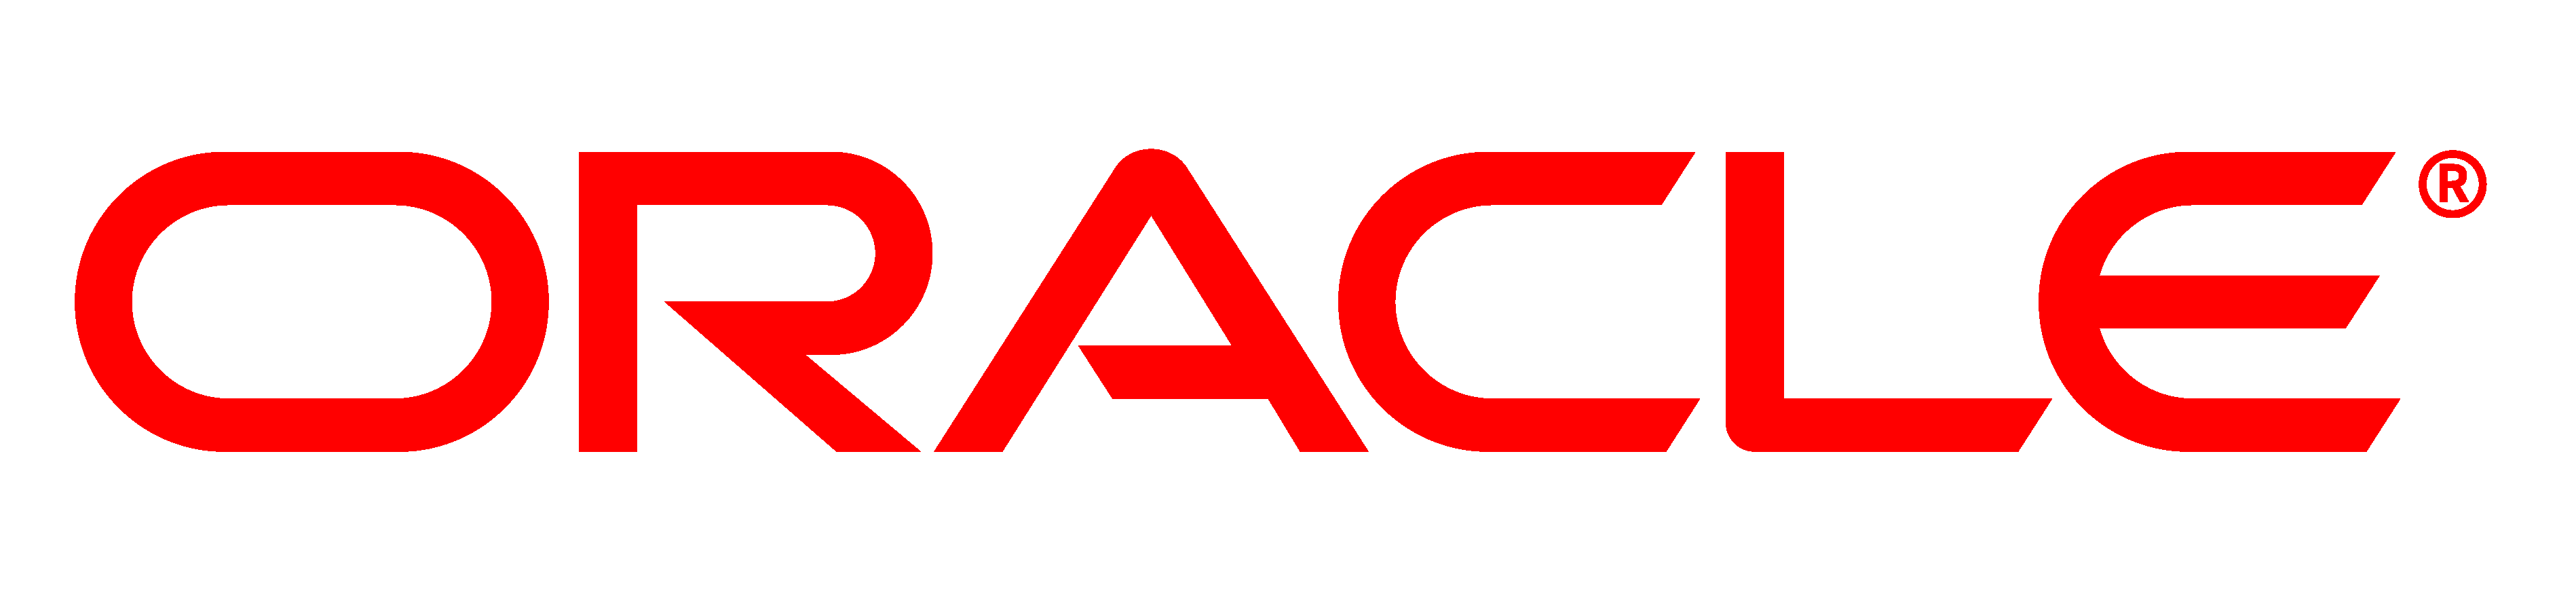 Oracle Logo Png Transparent &